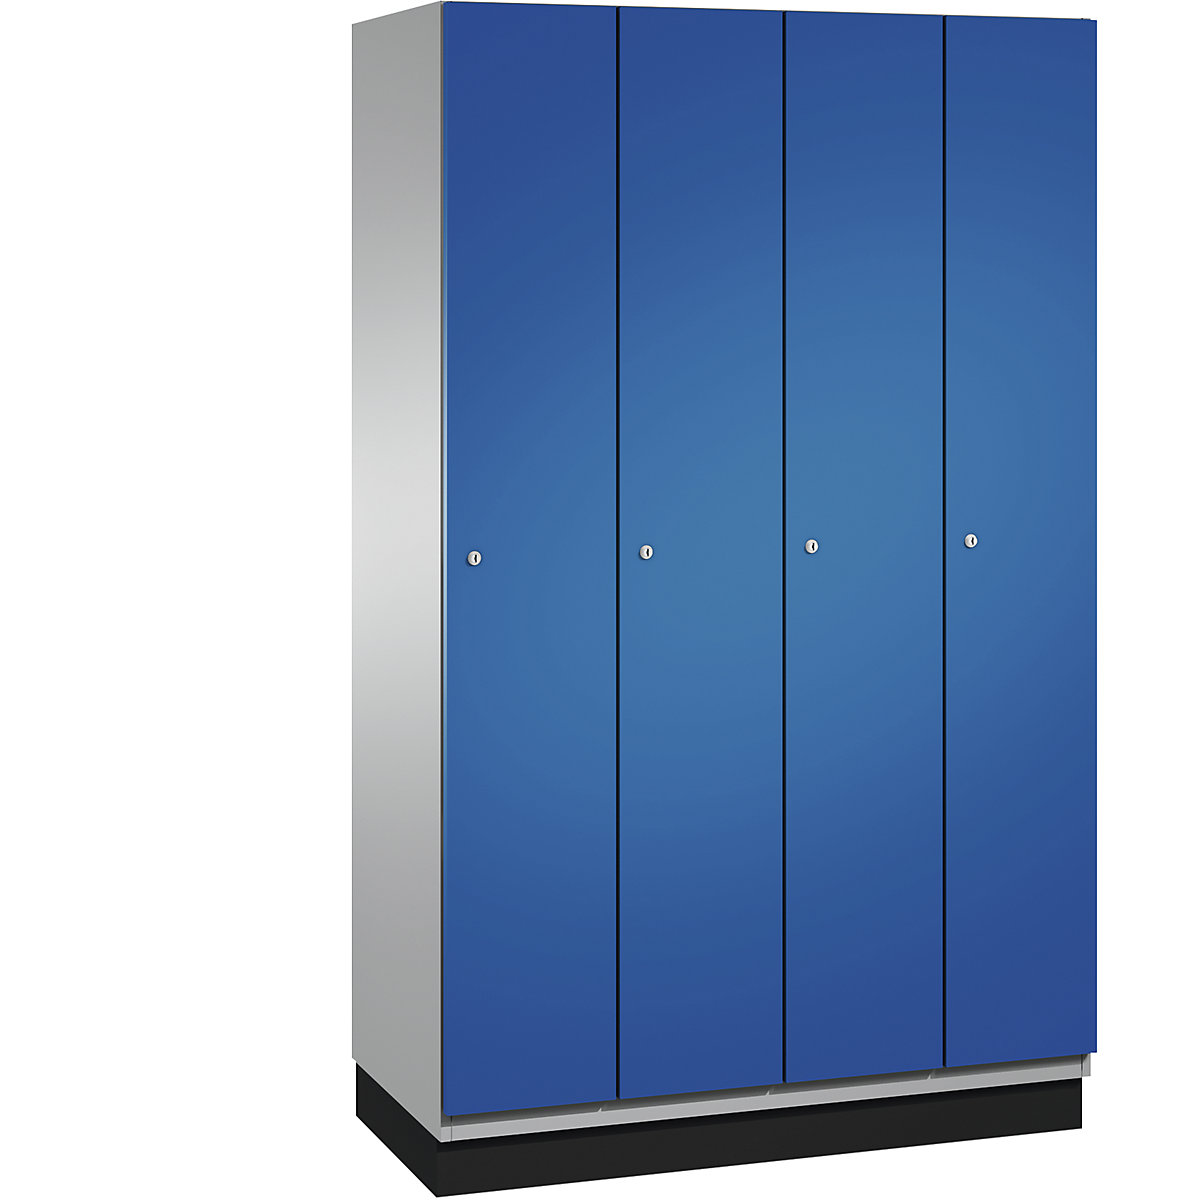 CAMBIO cloakroom locker with sheet steel doors – C+P, 4 compartments, 1200 mm wide, body white aluminium / door gentian blue-12